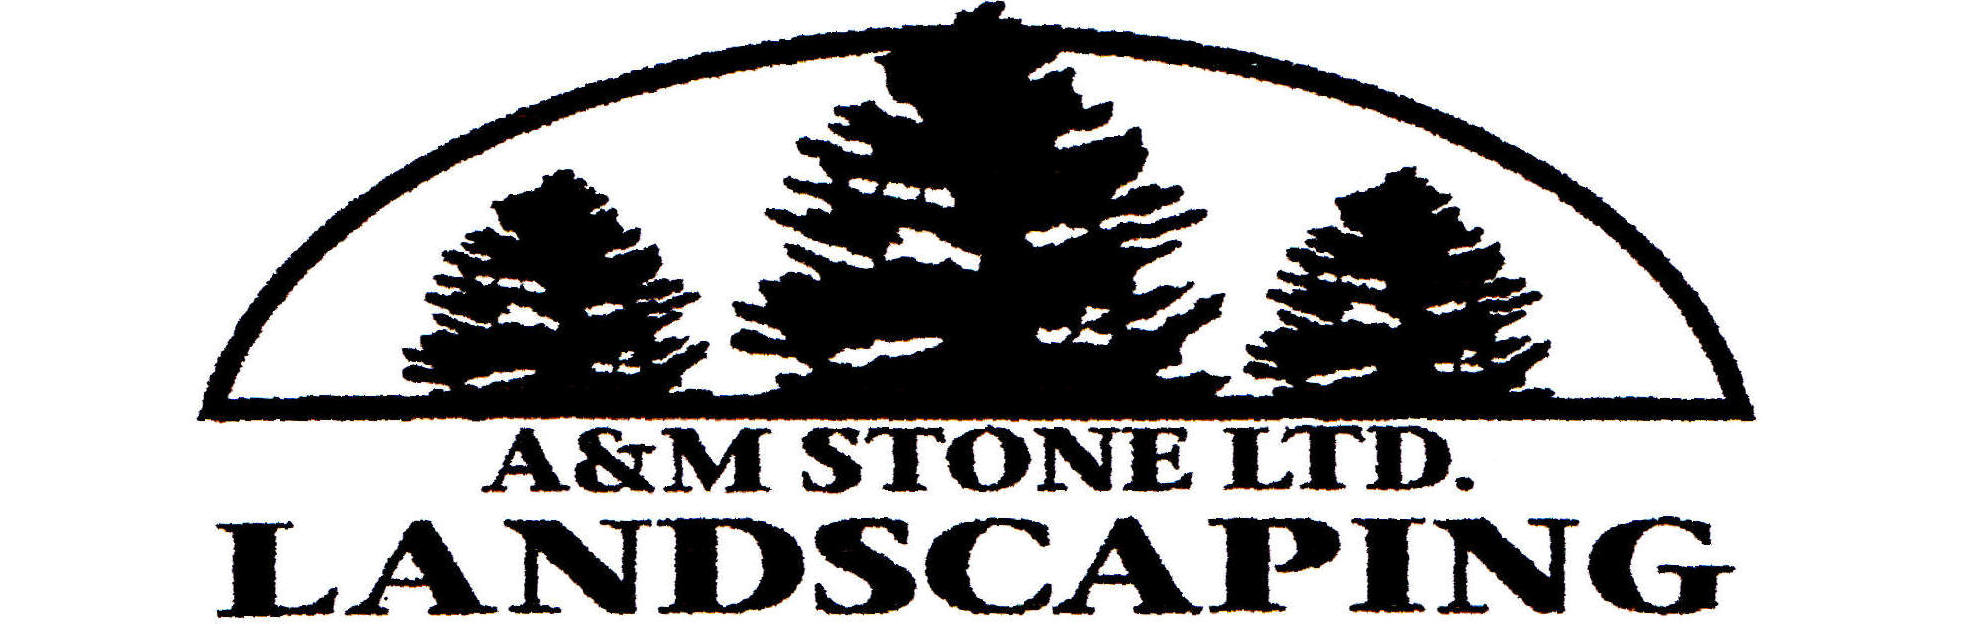 A&M Stone Ltd.  Banner